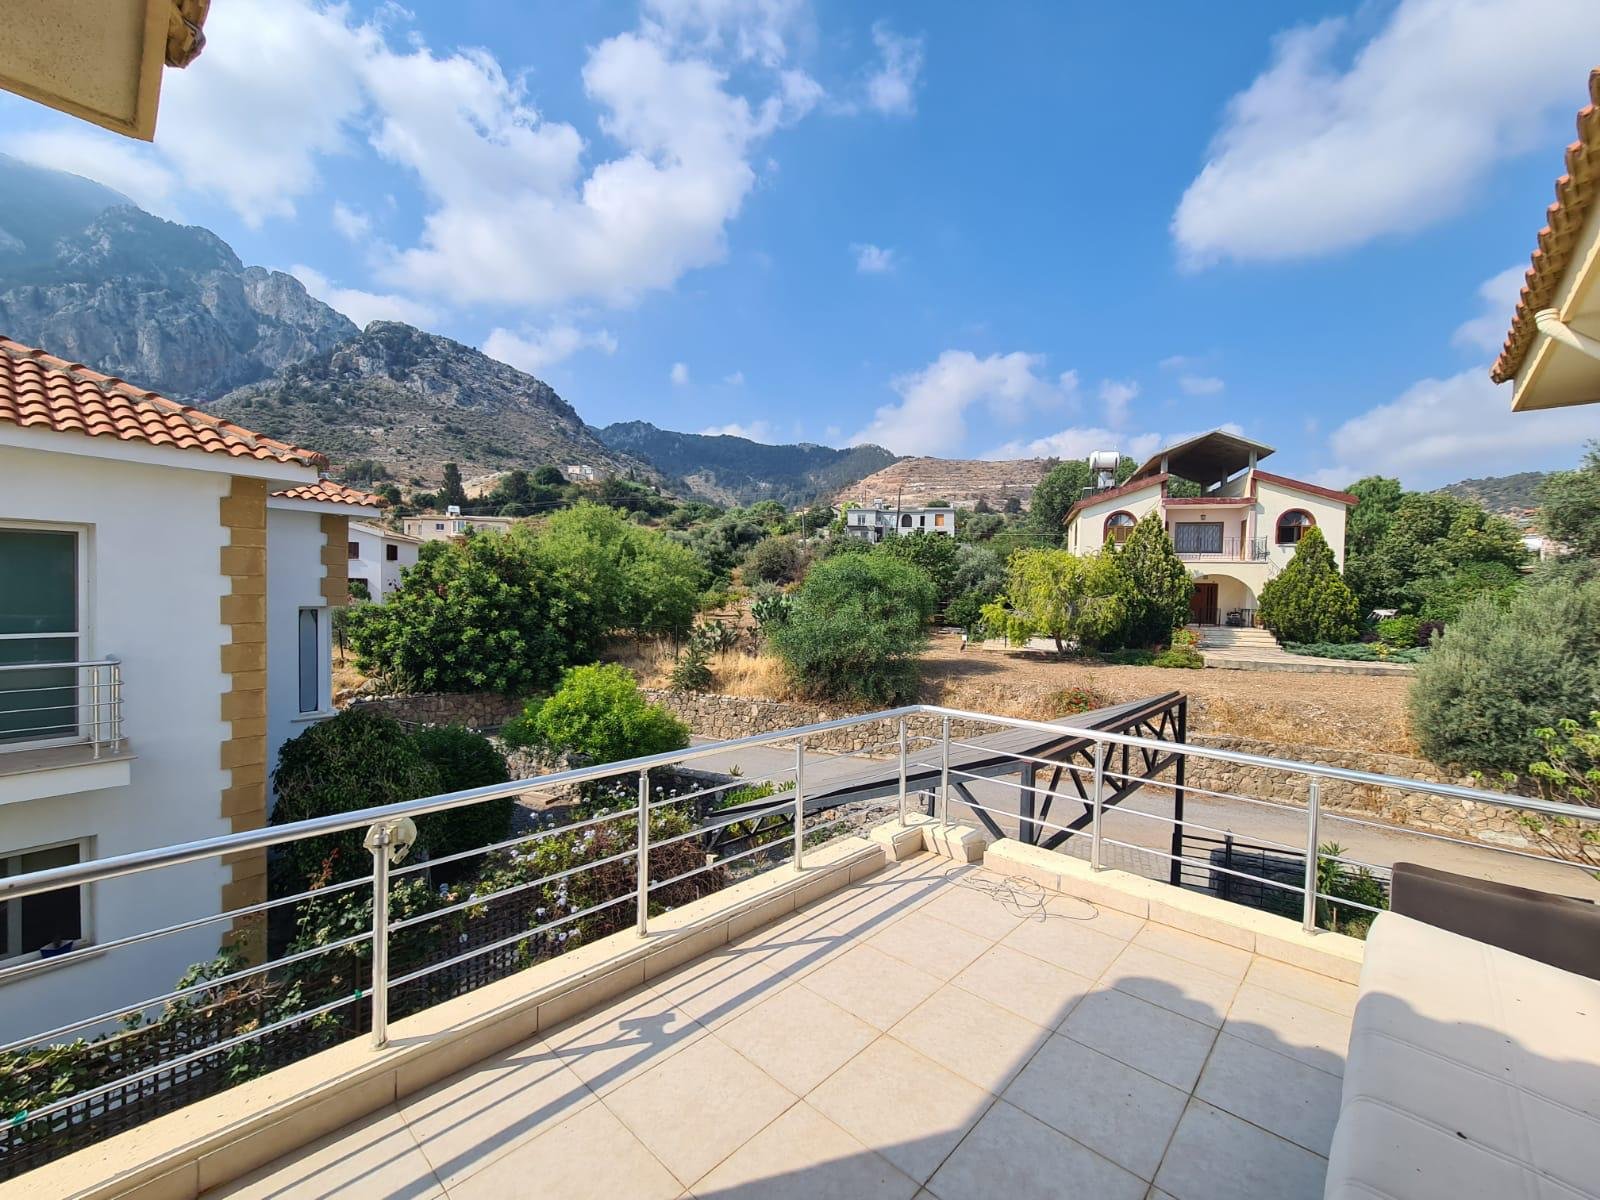 3 bedroom villa for sale in Kyrenia, Karshiyaka-30f31e1d-57c0-4761-abe5-972a14d8f81e